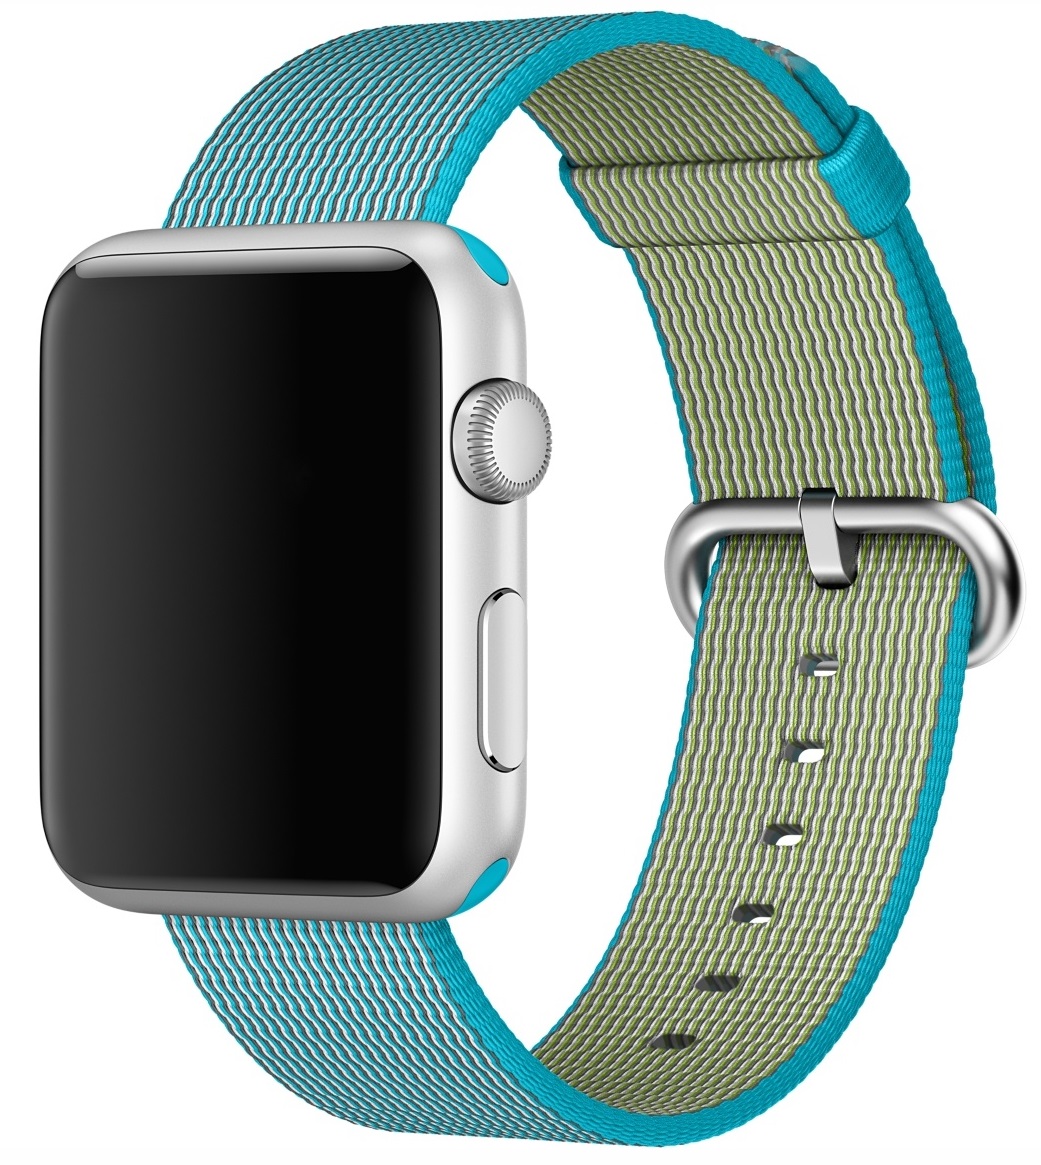 Apple watch синий ремешок. Эпл вотч 7 ремешки. Ремешок для Apple watch 42mm. Эпл вотчи бирюзовый оемешок. Эппл вотч бирюзовый ремешок.